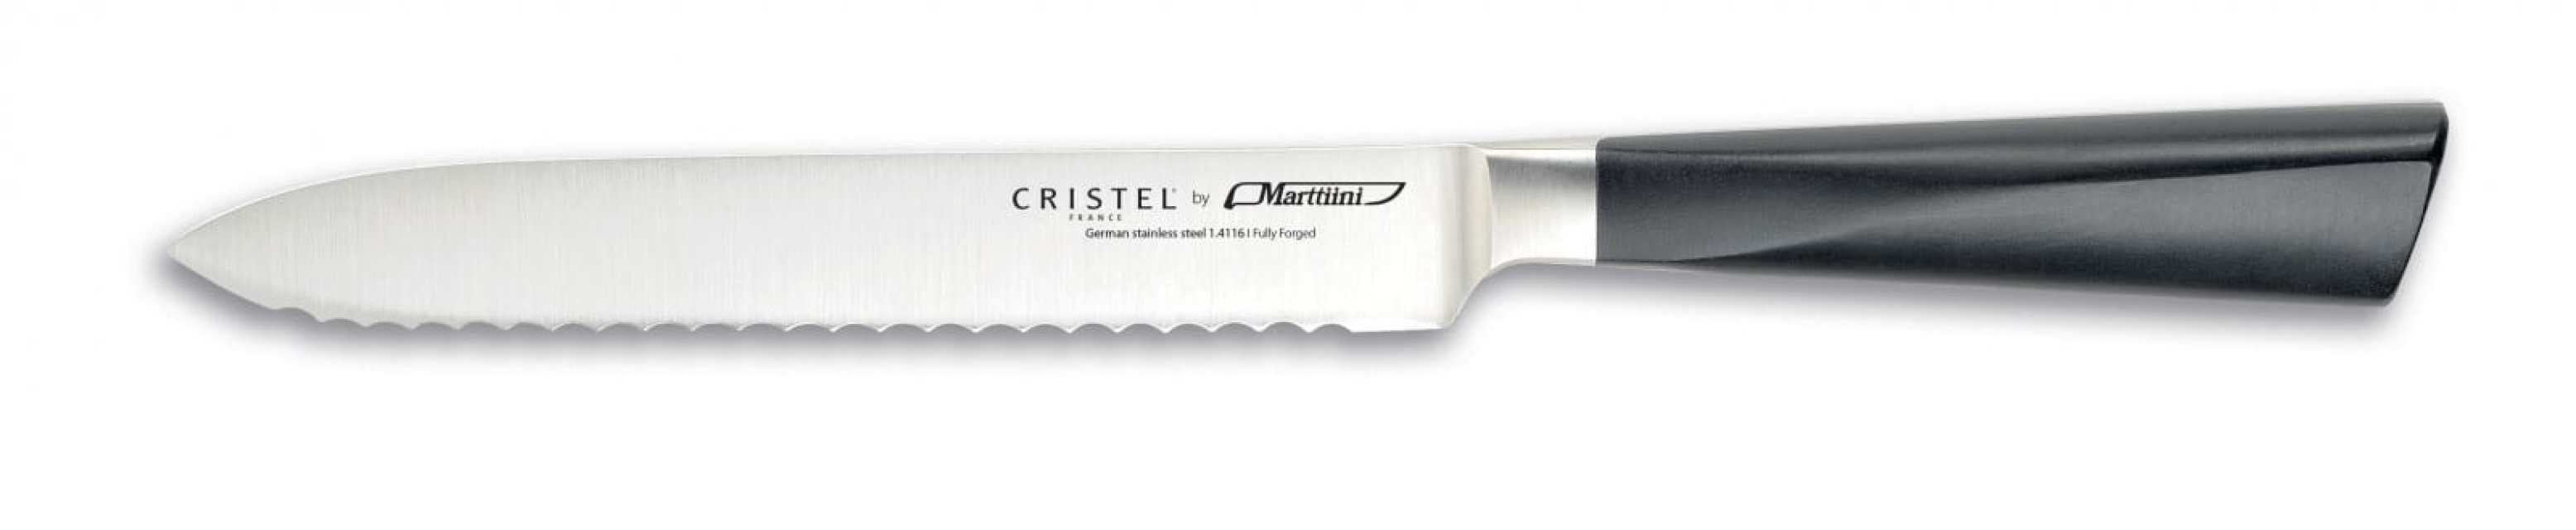 Takket kniv, 14 cm - Cristel